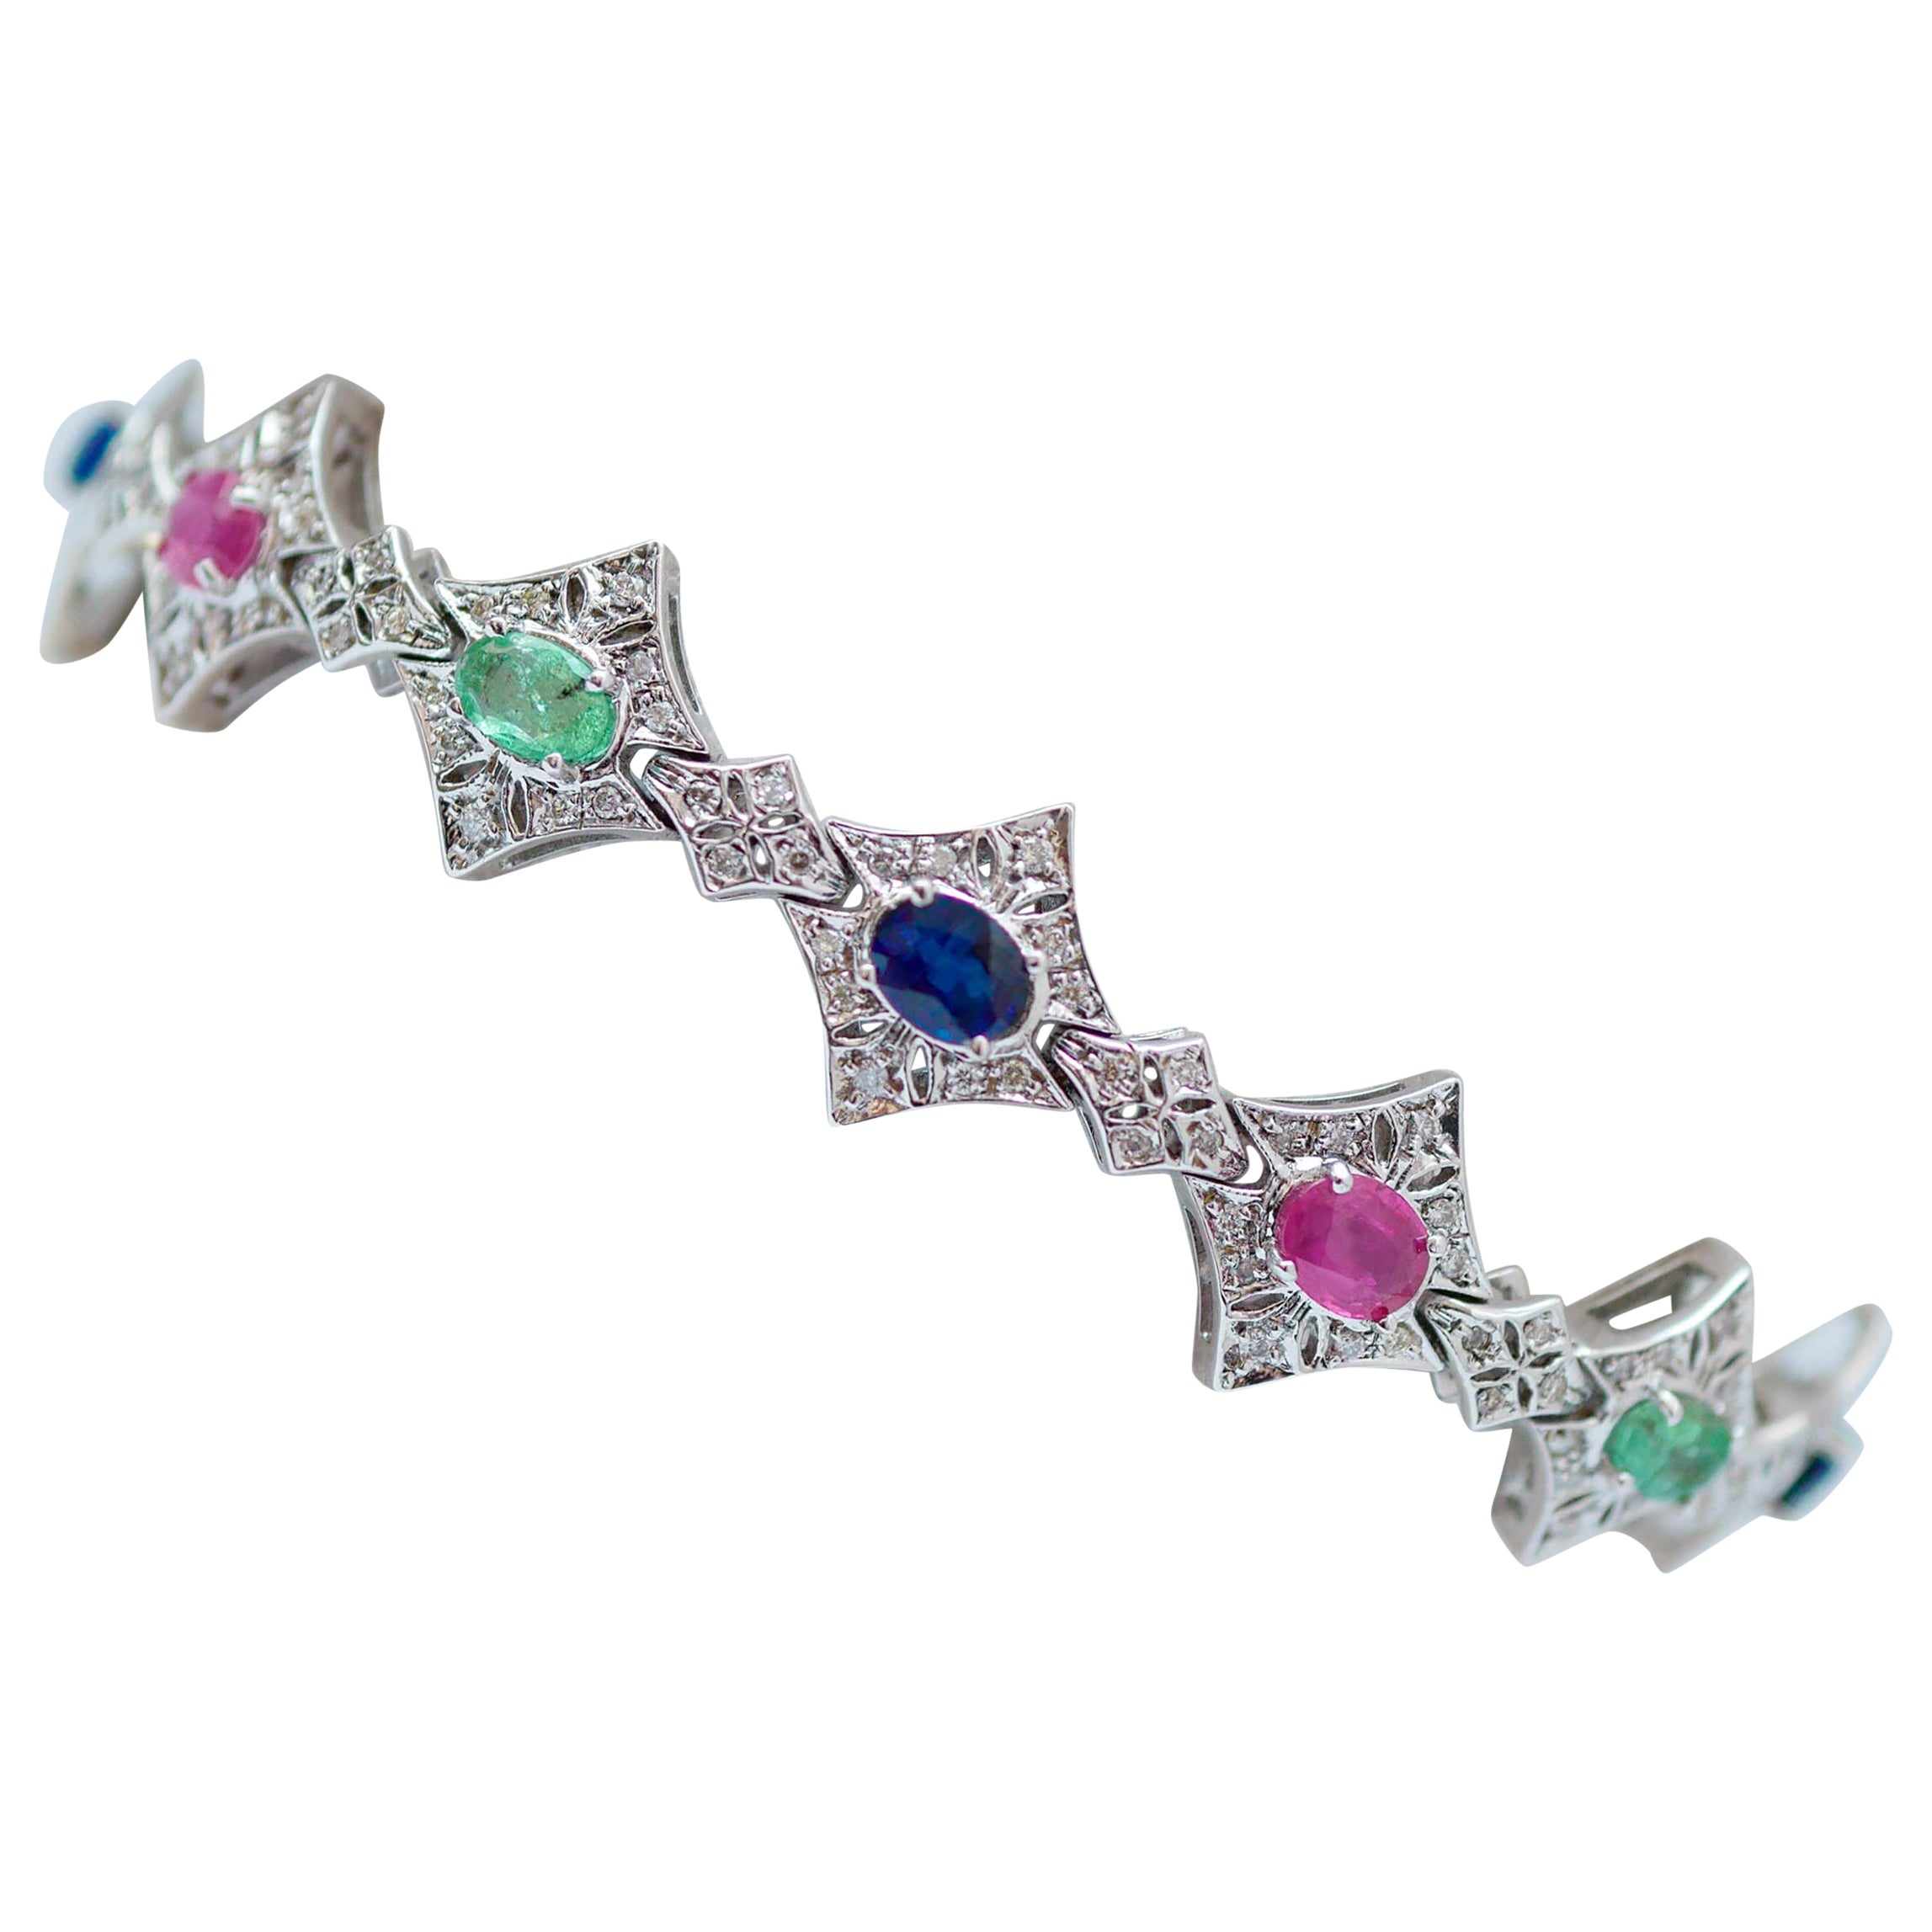 Emeralds, Rubies, Sapphires, Diamonds, 14 Karat White Gold Bracelet.